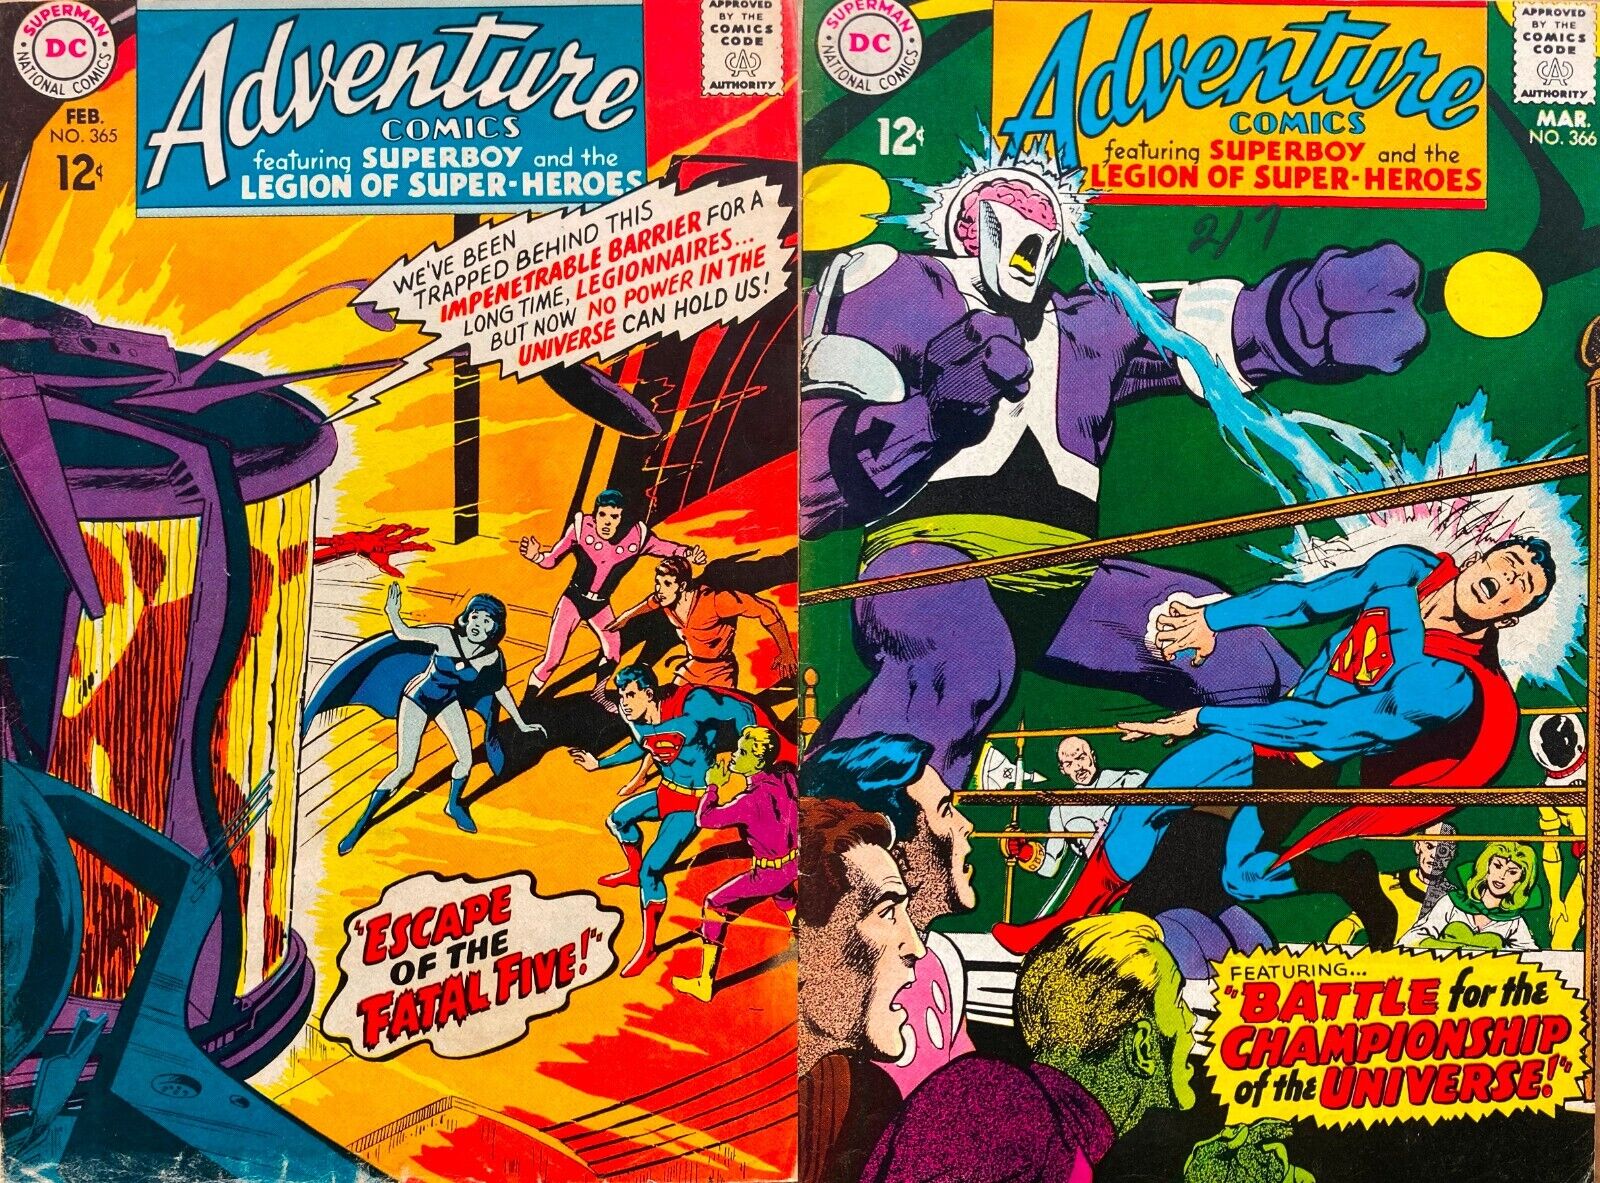 ADVENTURE COMICS # 365 & # 366 - Superboy Legion of Super-Heroes Silver Age DC